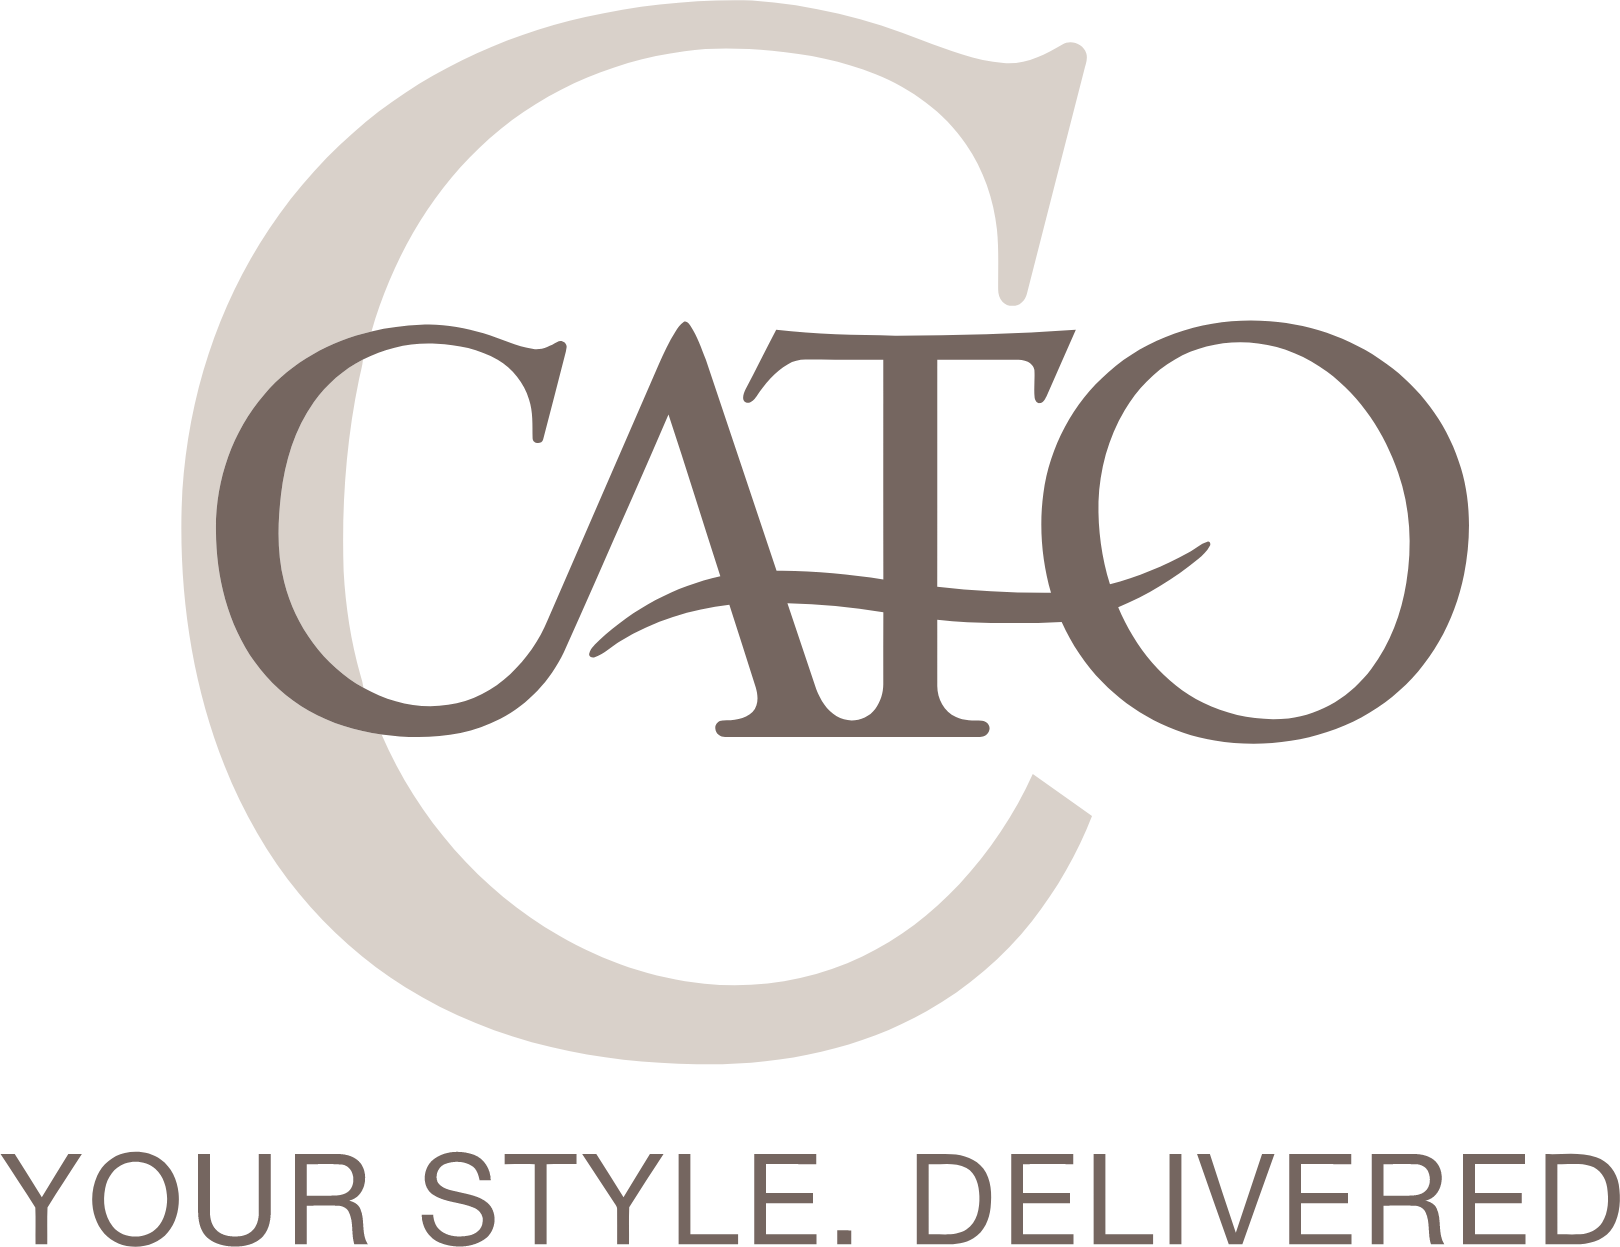 Cato Fashion logo large (transparent PNG)